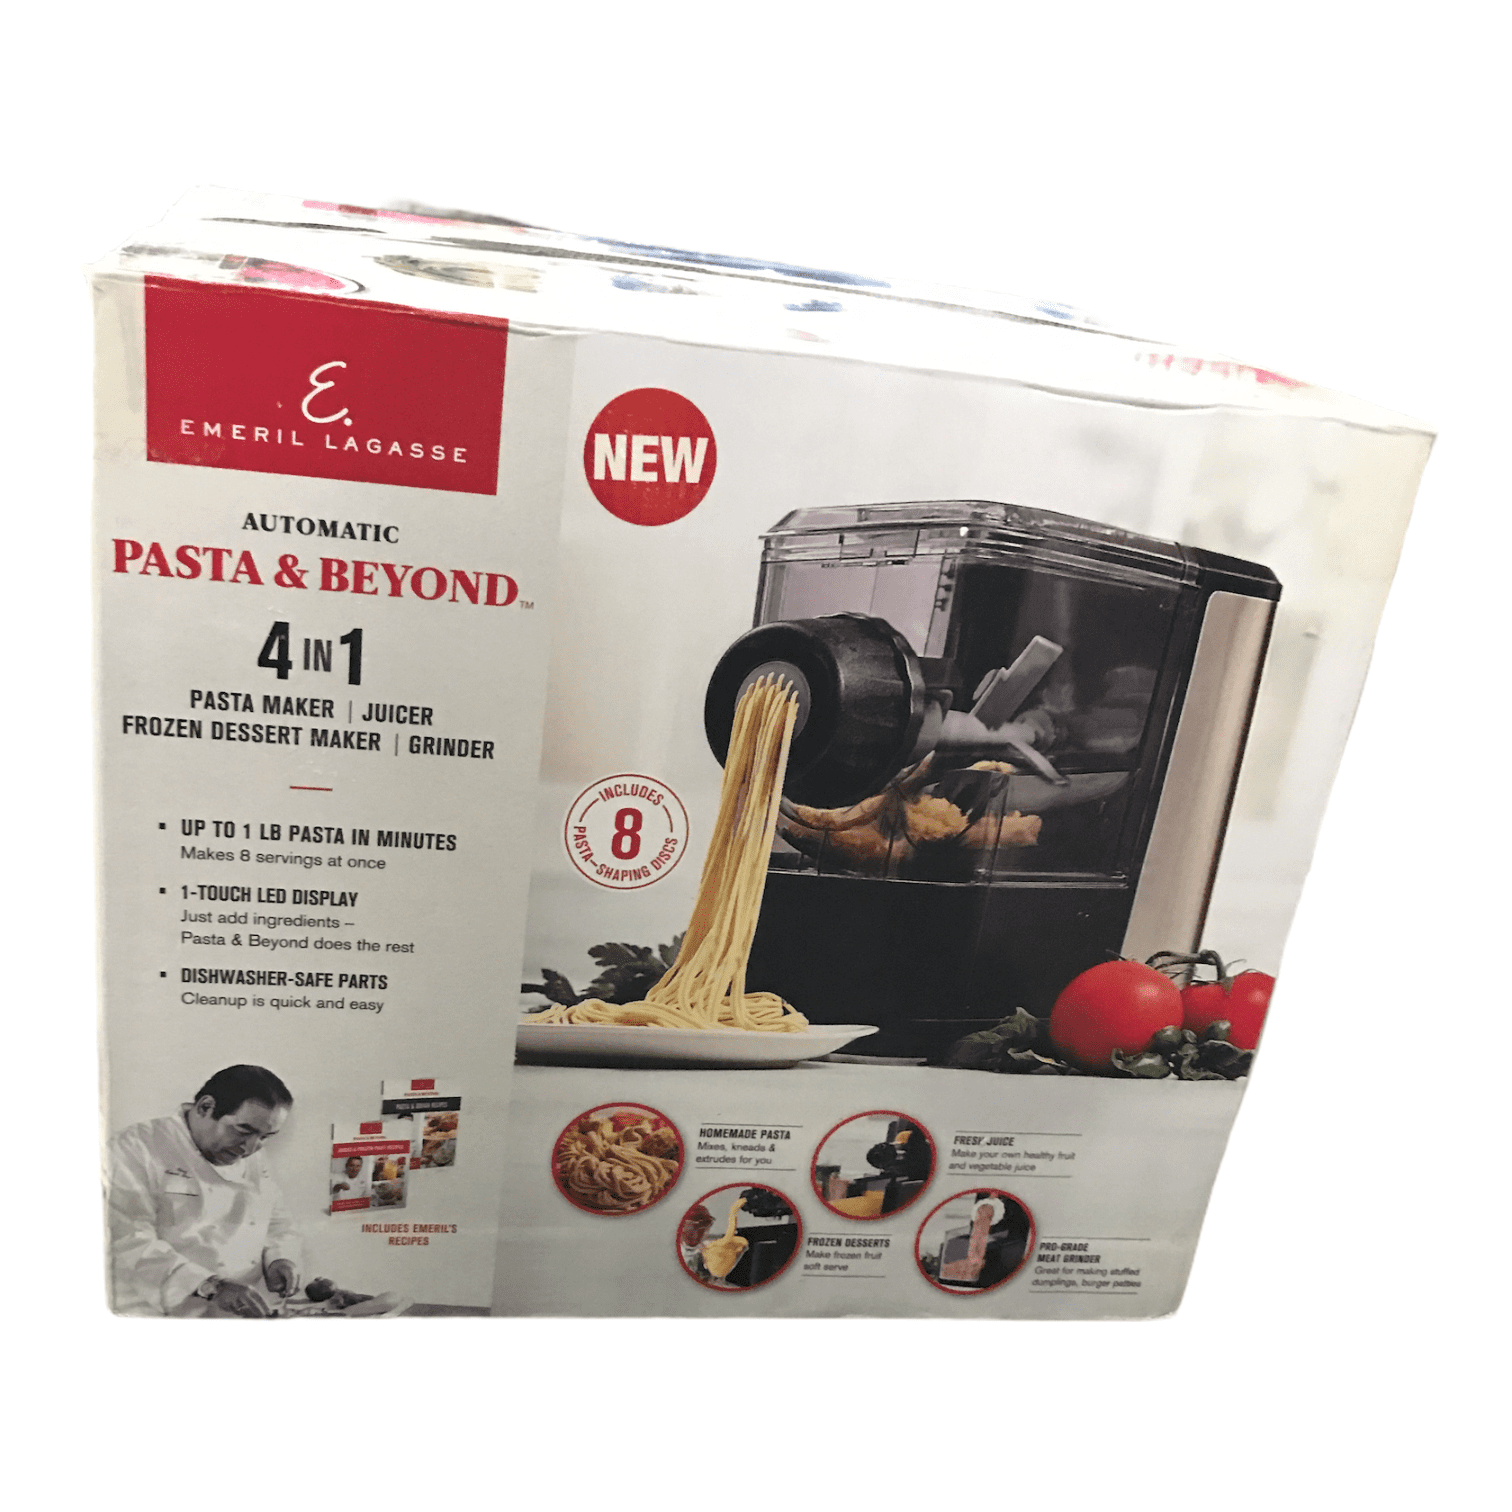 , 135 mm, 350 mm Philips Viva Collection HR2345/19 Fresh Pasta Maker Machine Pasta and Ravioli Machine Pasta Machine 220-240, 50Hz, 150W, 1 pc s